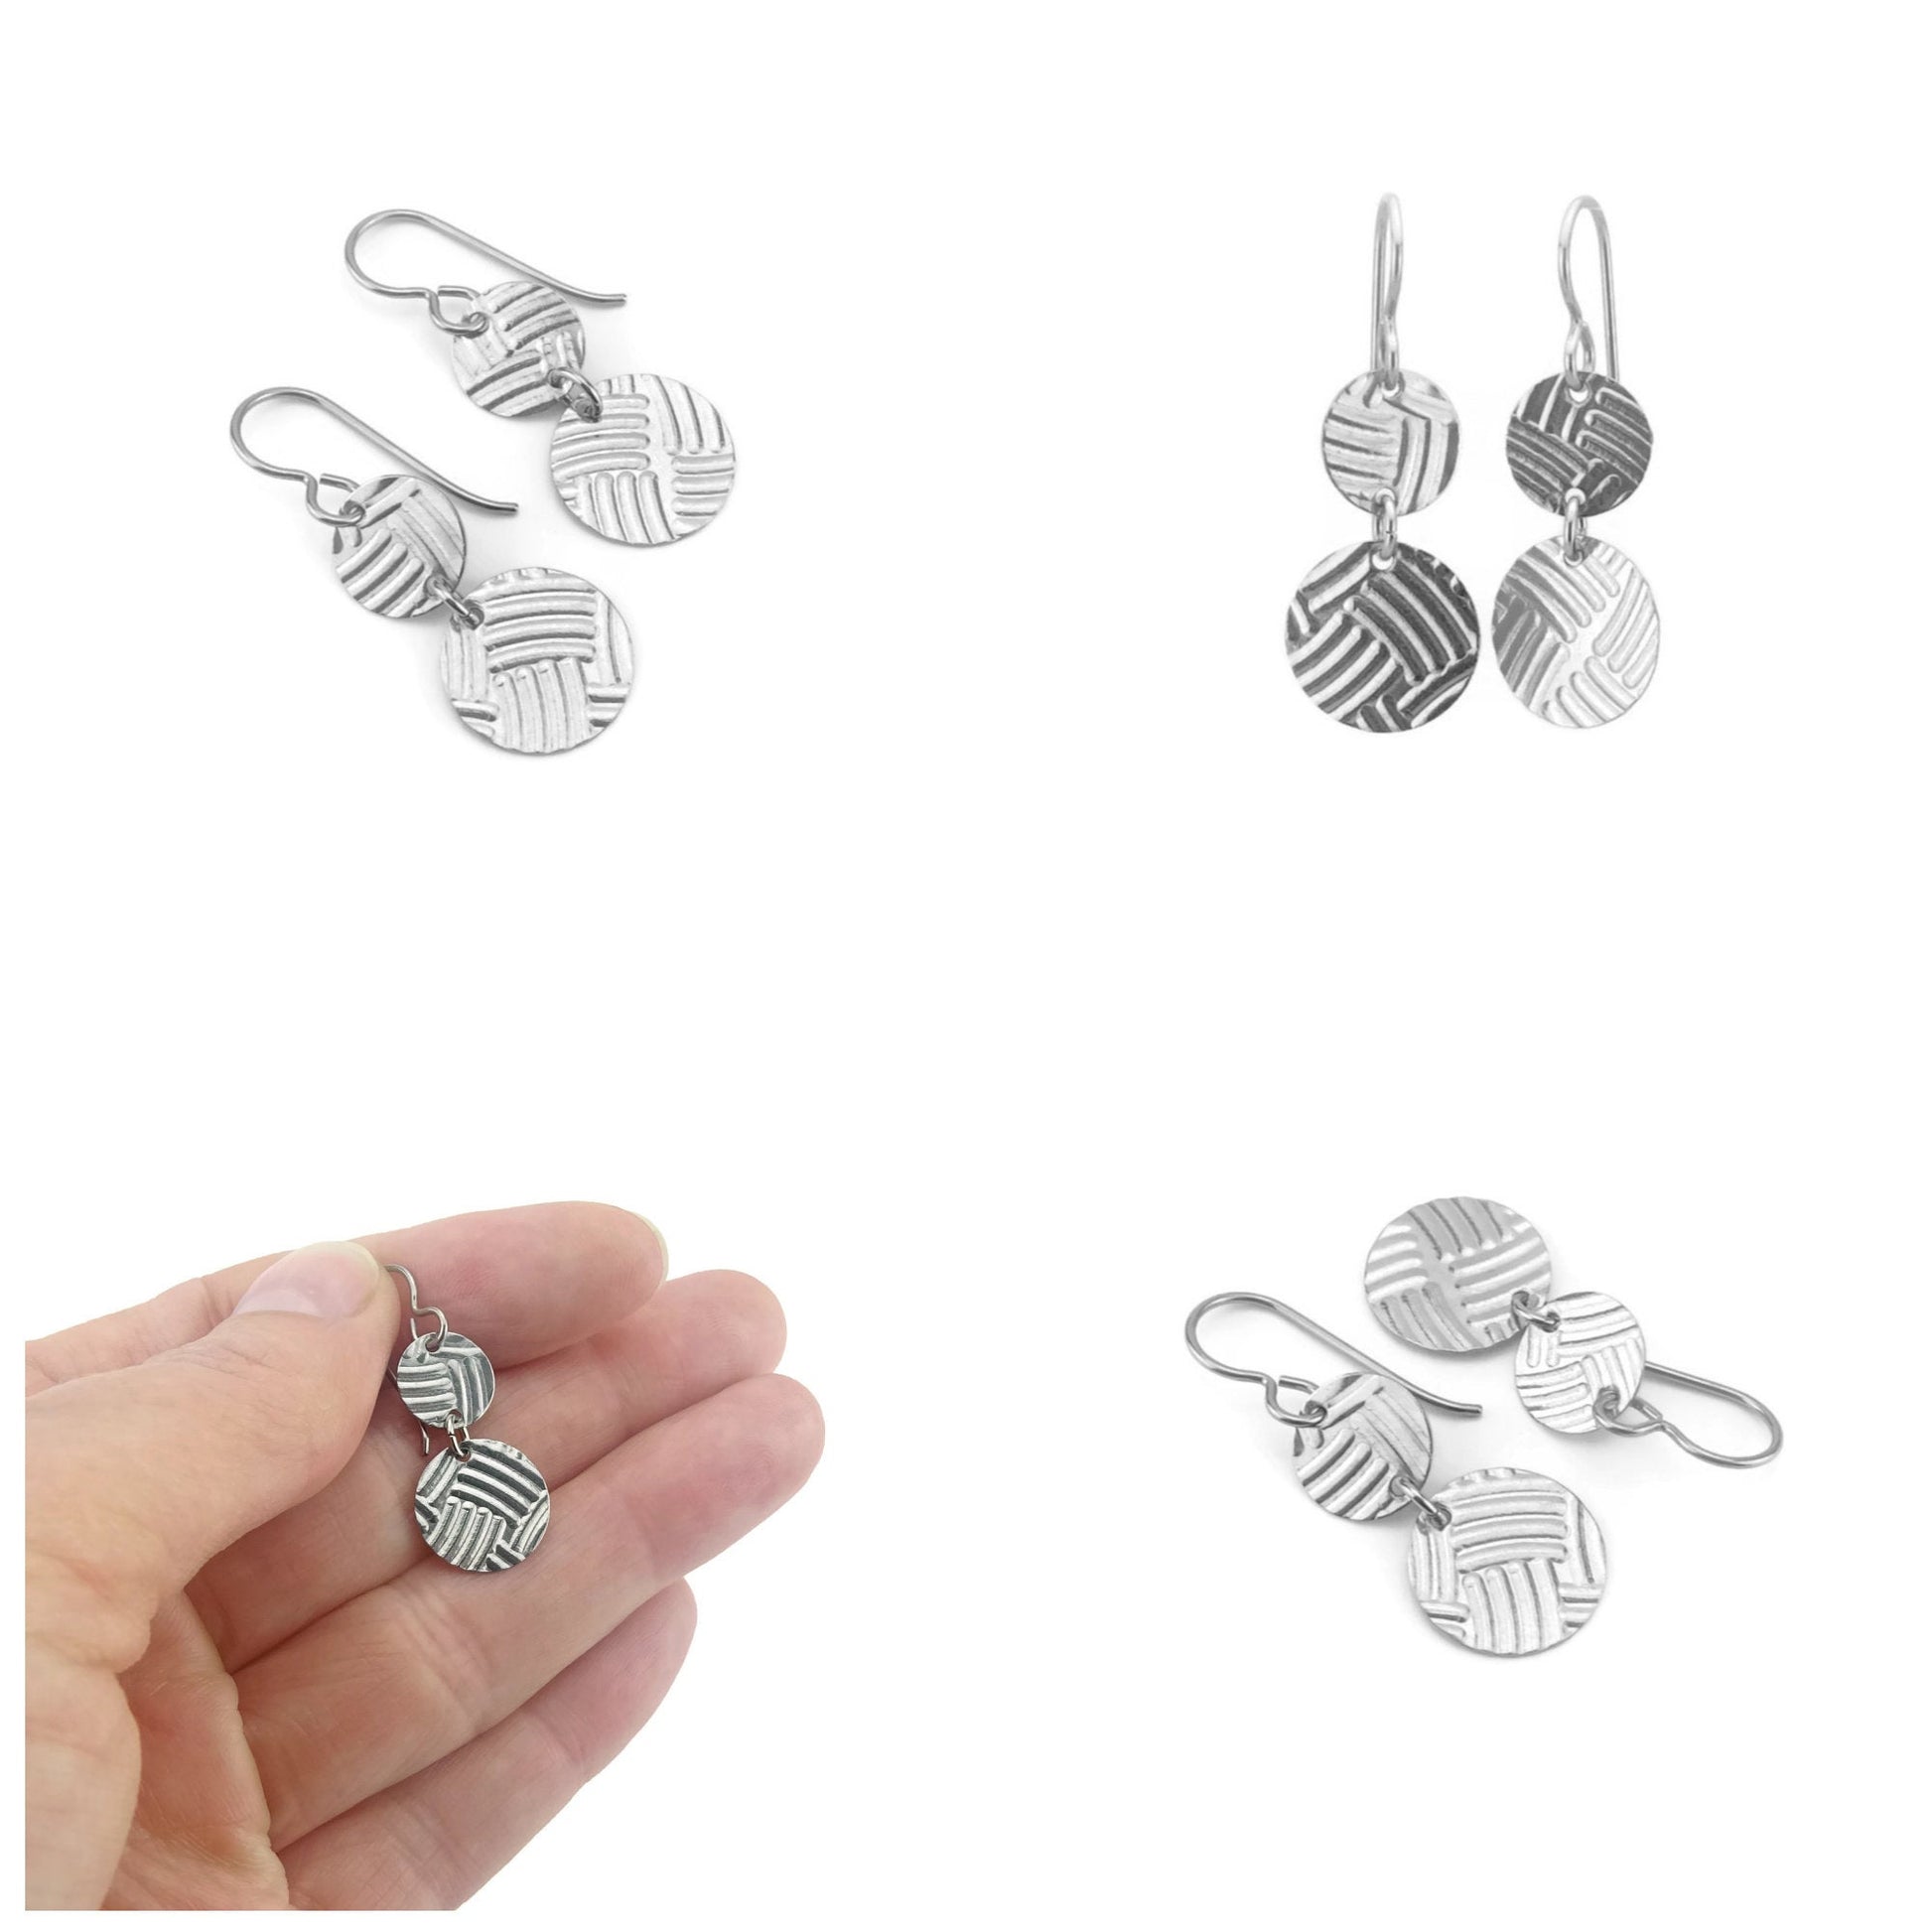 Nickel Free Earrings, Weave Patterned Double Disc Earrings, Silver Color Niobium Titanium Earrings, Hypoallergenic Sensitive Ears Earrings